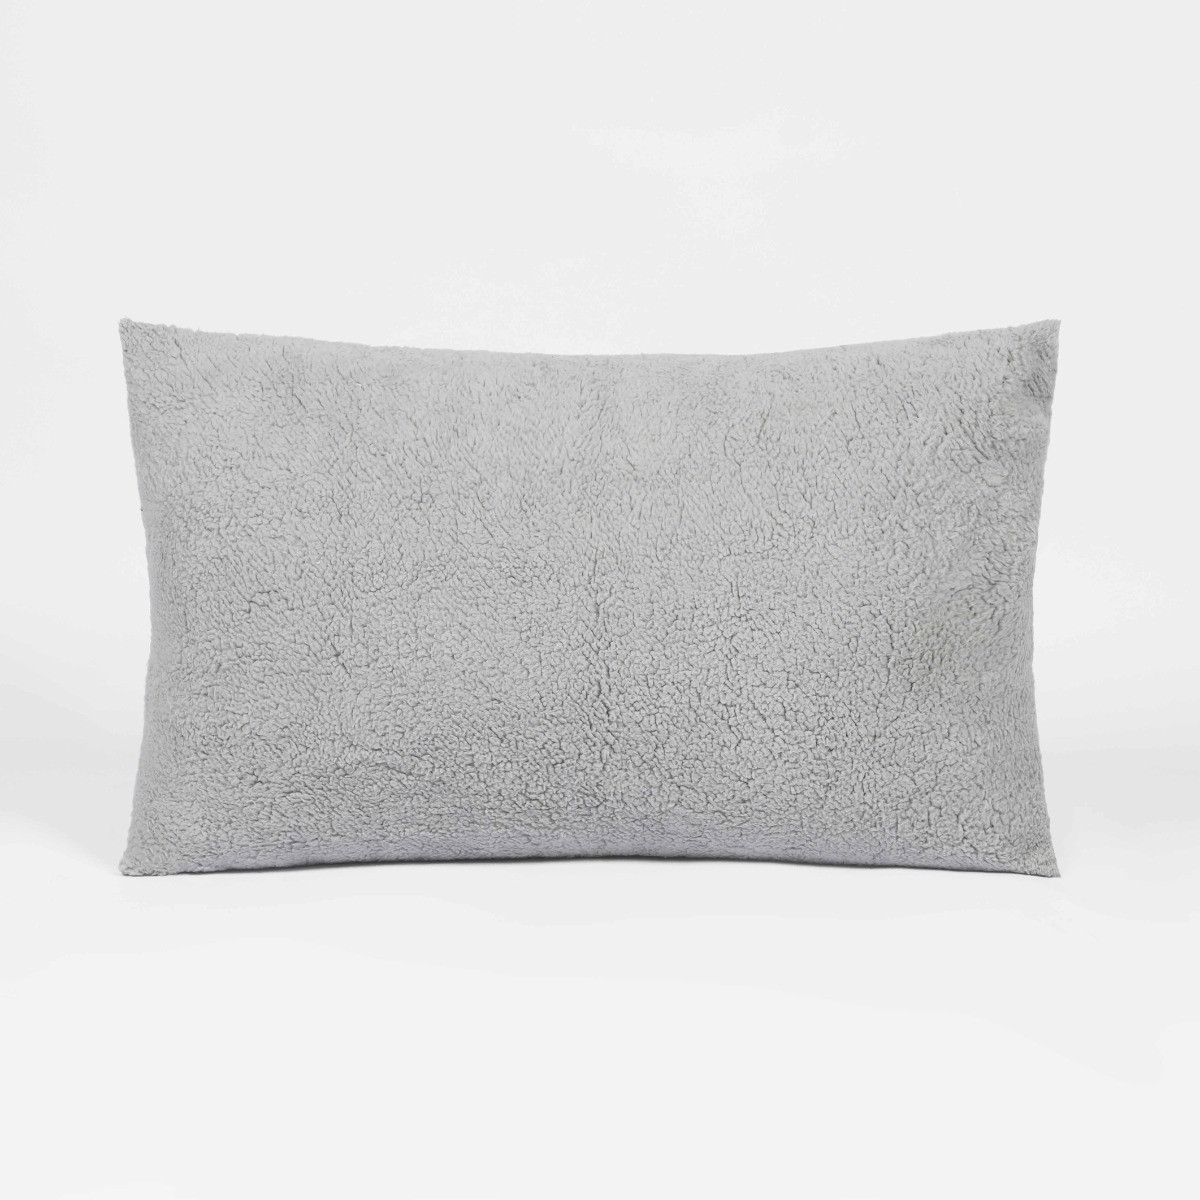 OHS Teddy Fleece Pillow - Charcoal>